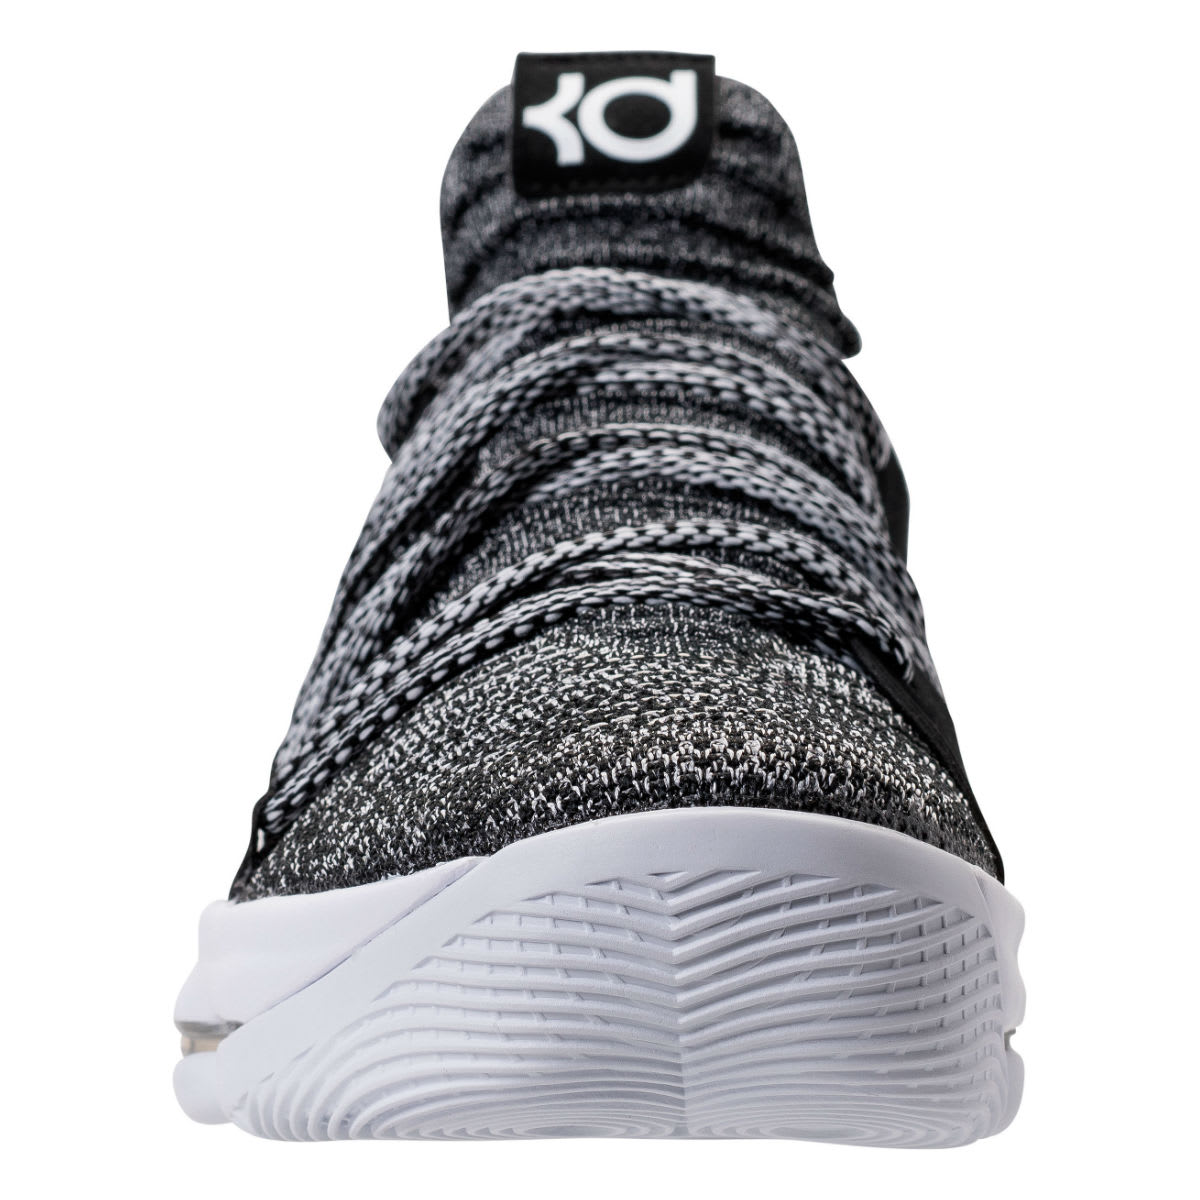 Nike KD 10 Oreo Release Date Front 897815-001